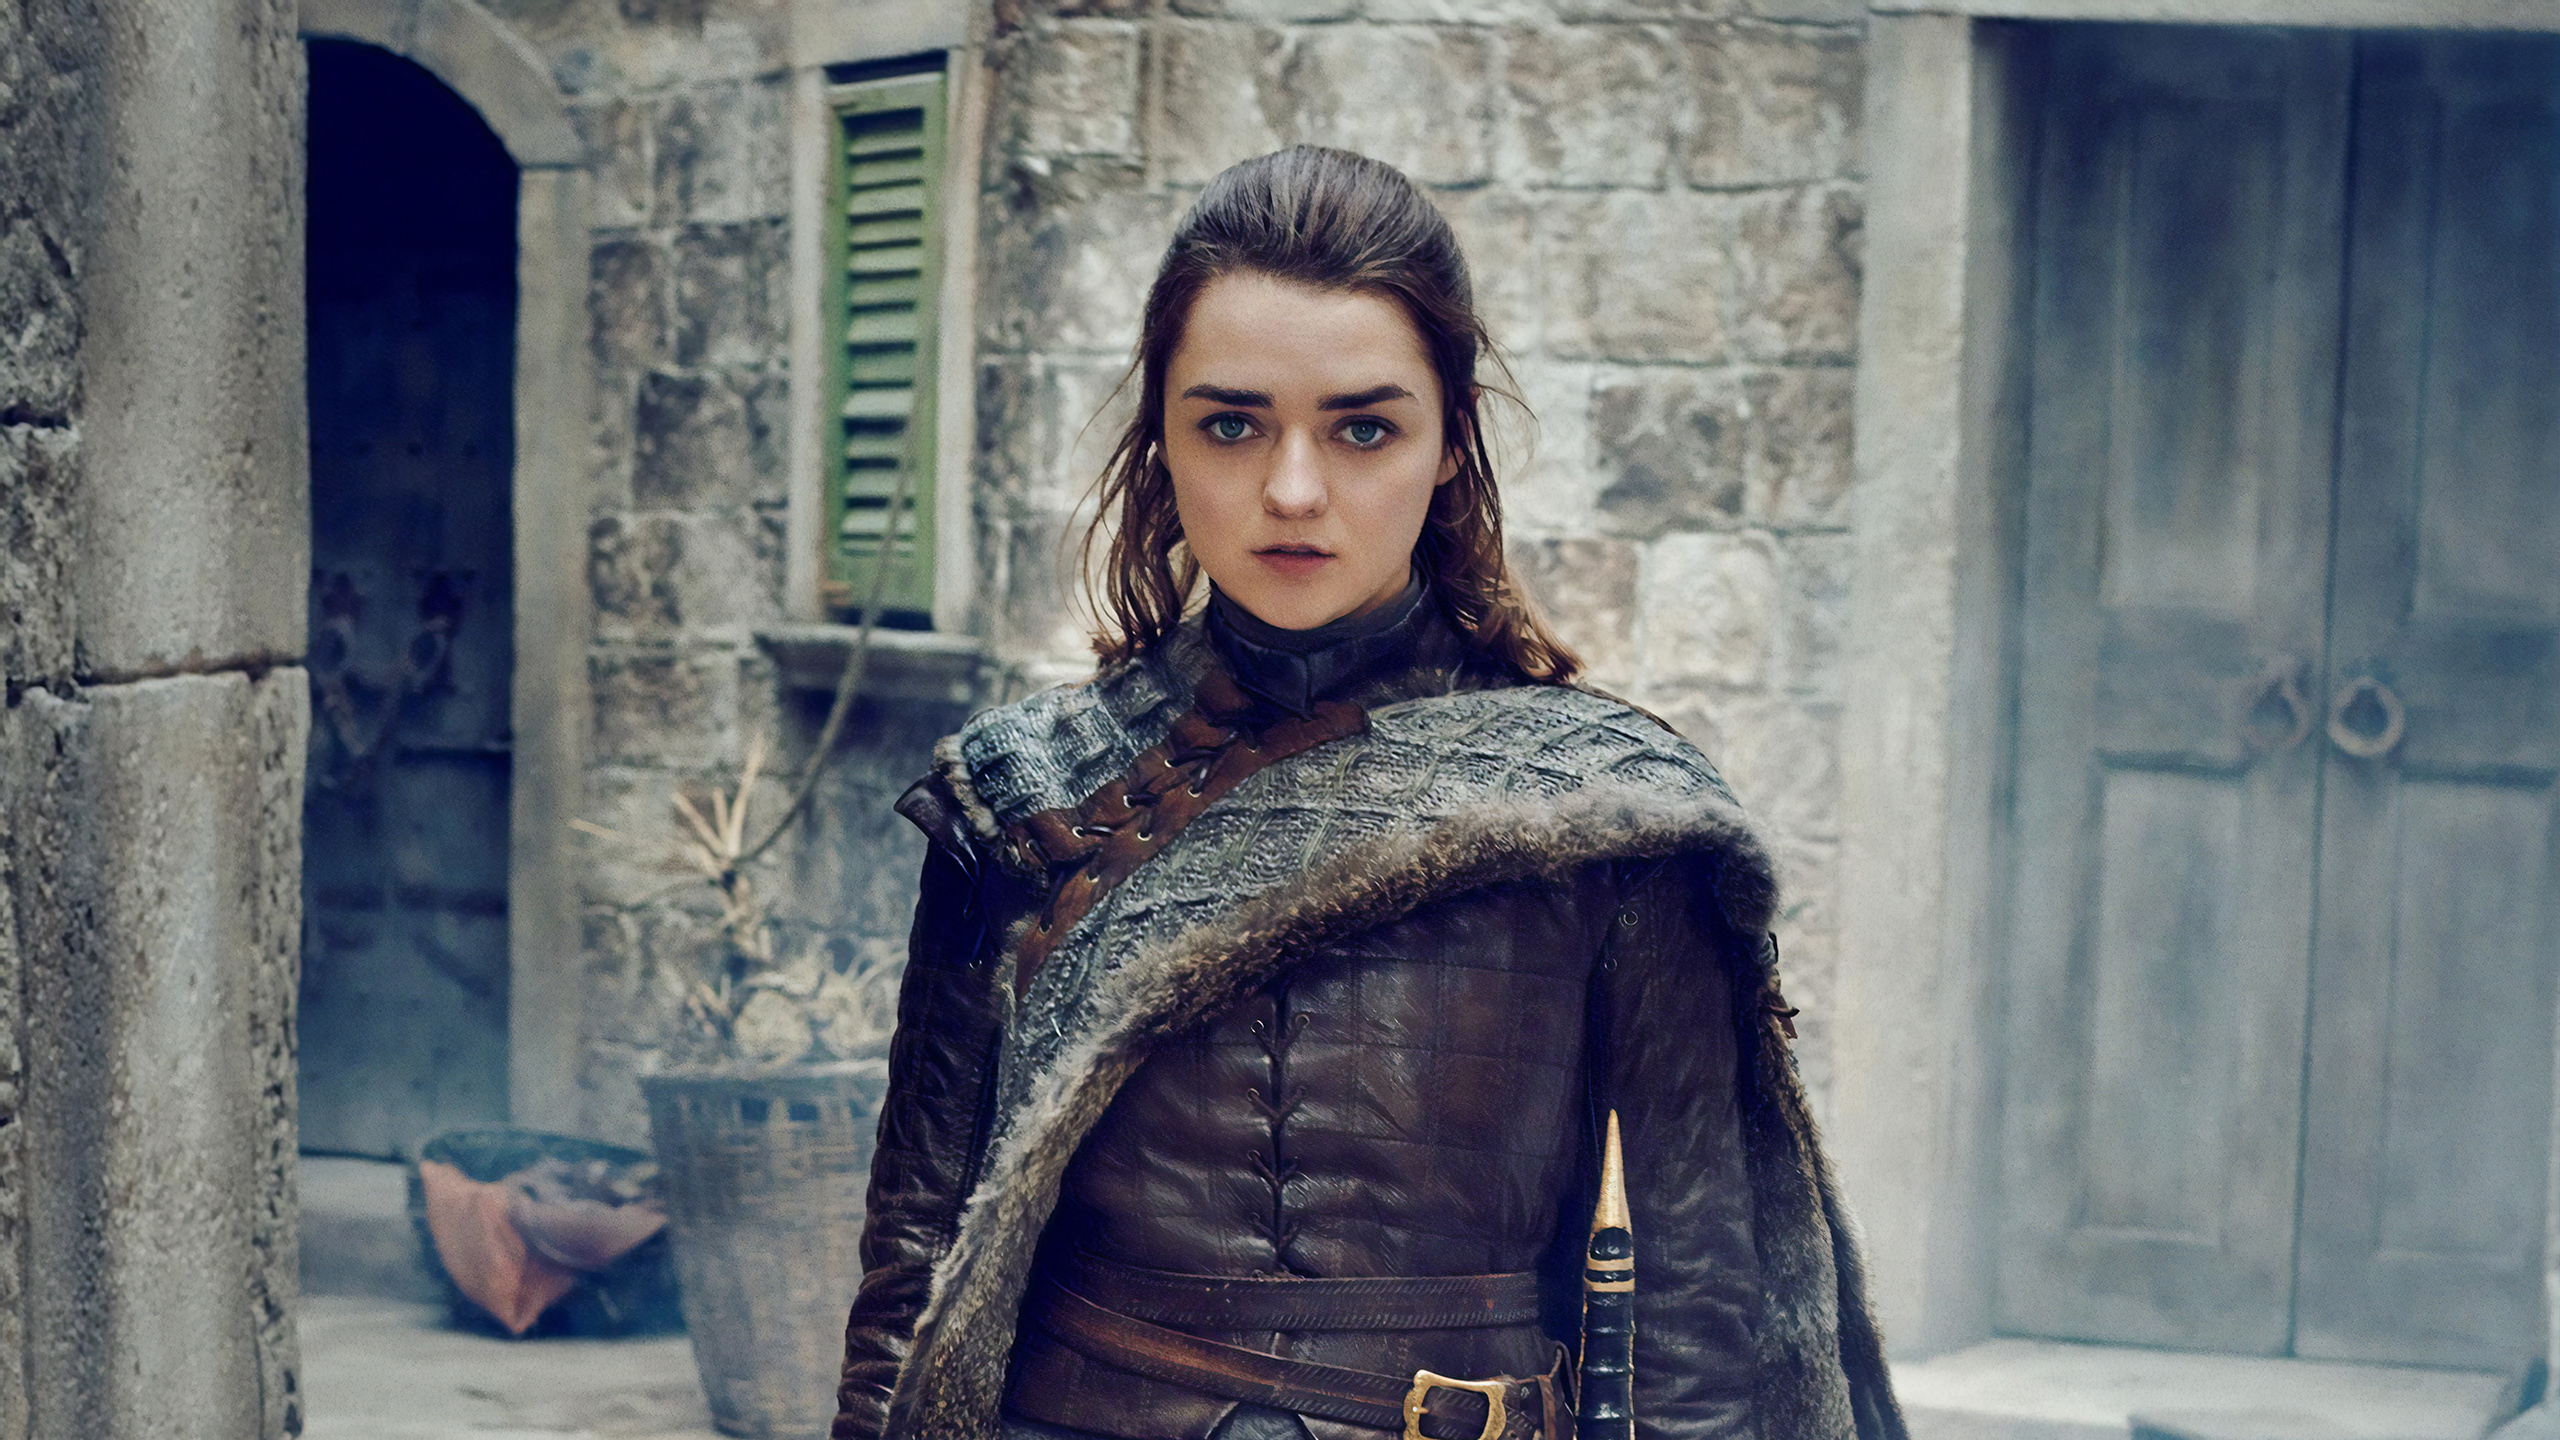 3. Game of Thrones: Arya Stark's Blonde Hair Sparks Theories - wide 4